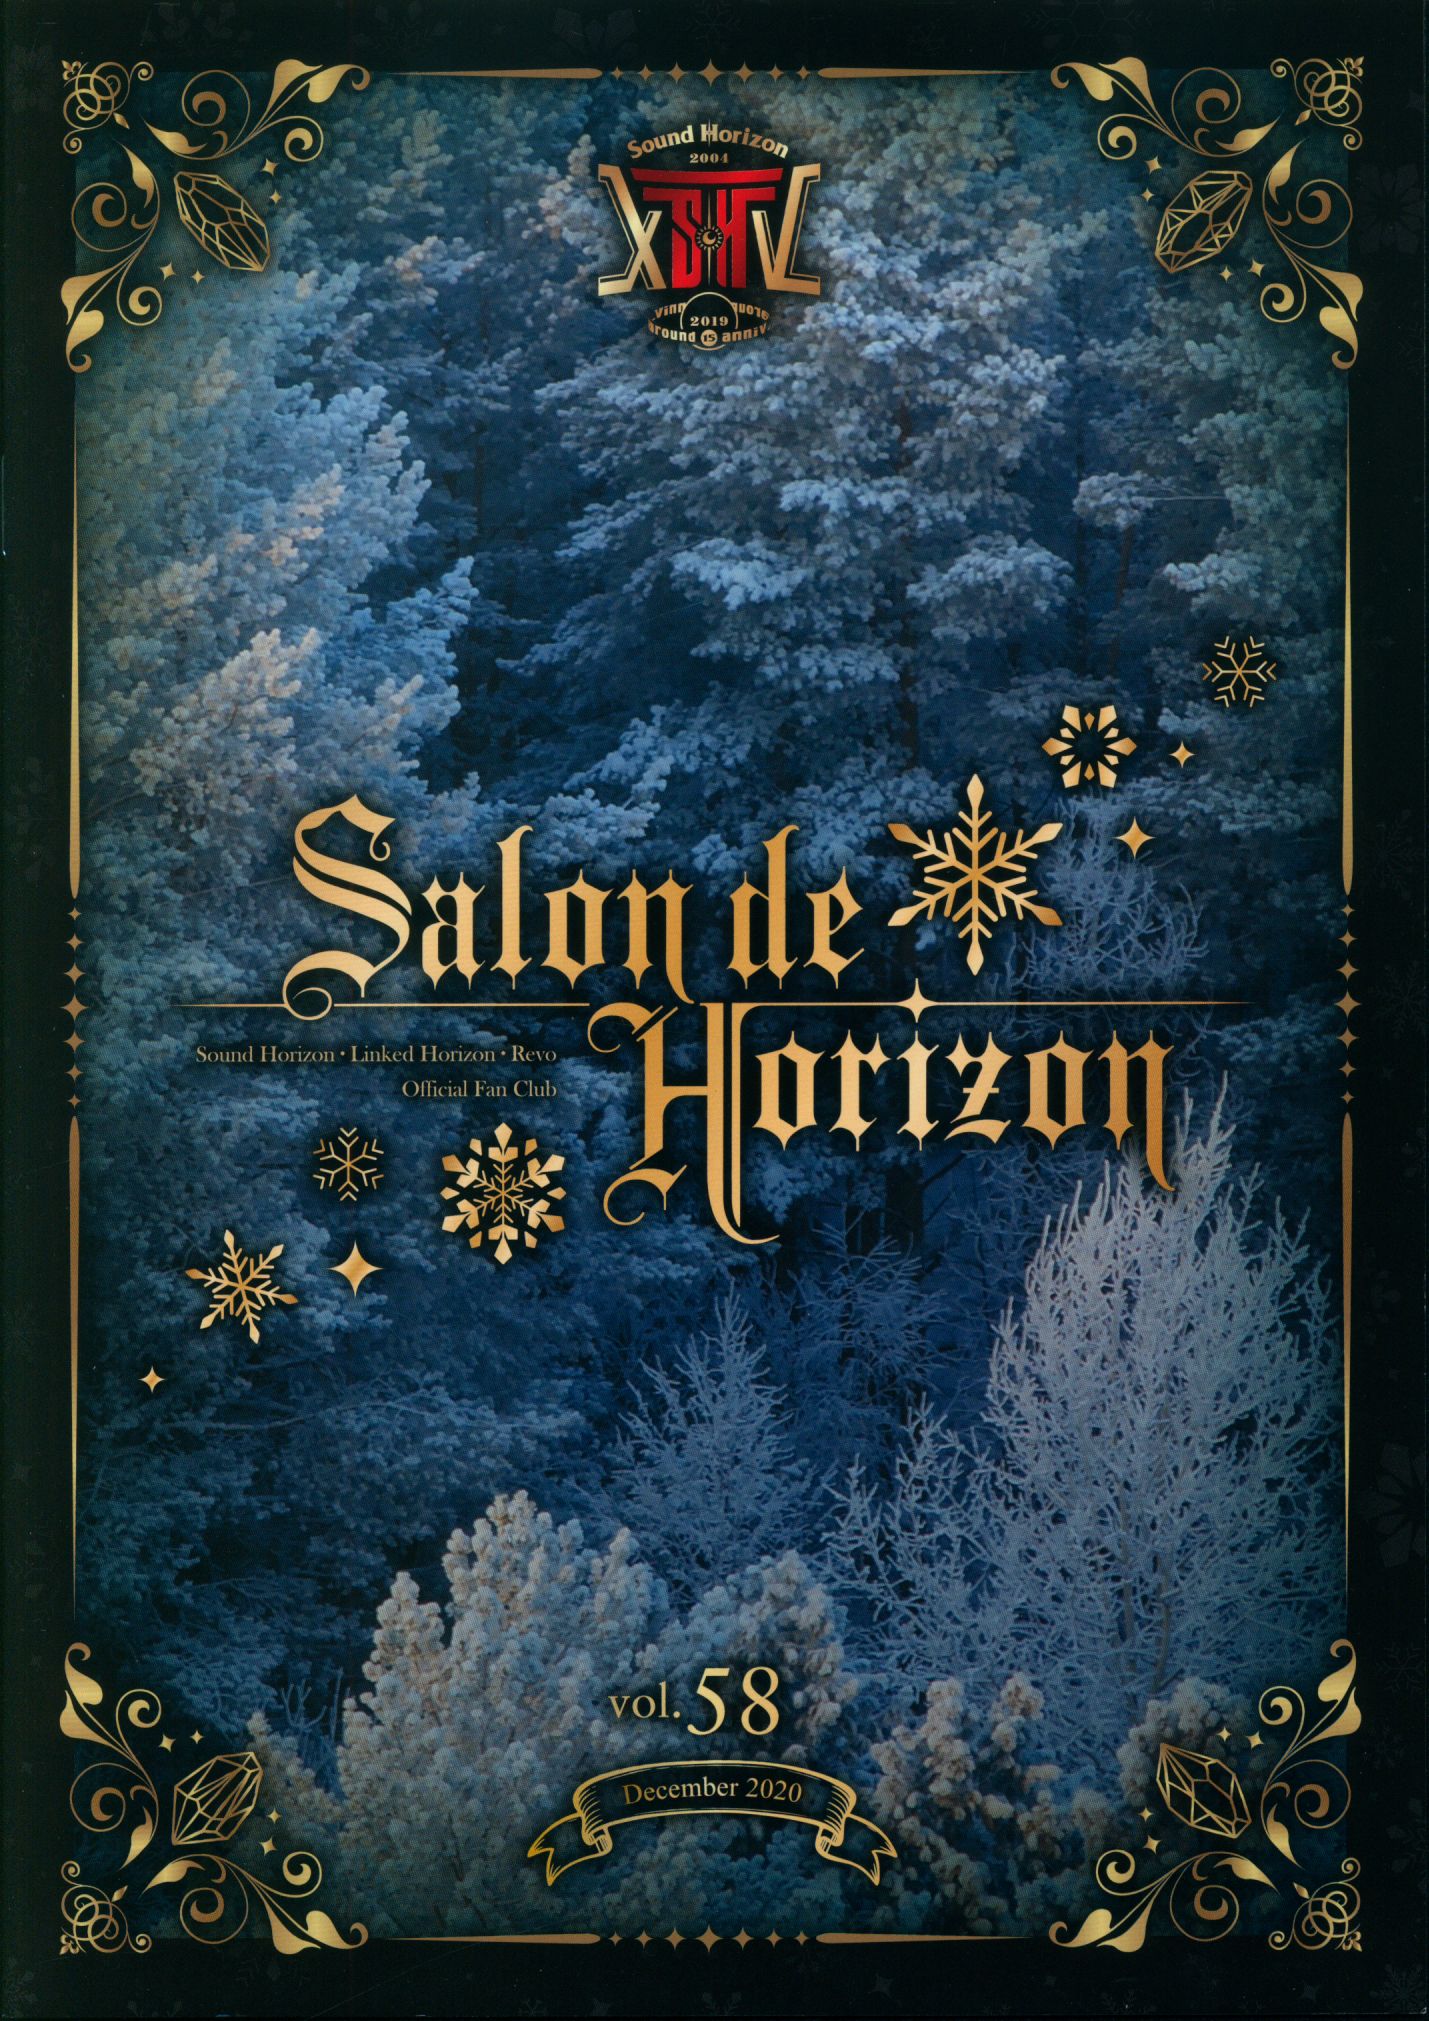 Sound Horizon ファンクラブ会報 Salon de Horizon Vol.58